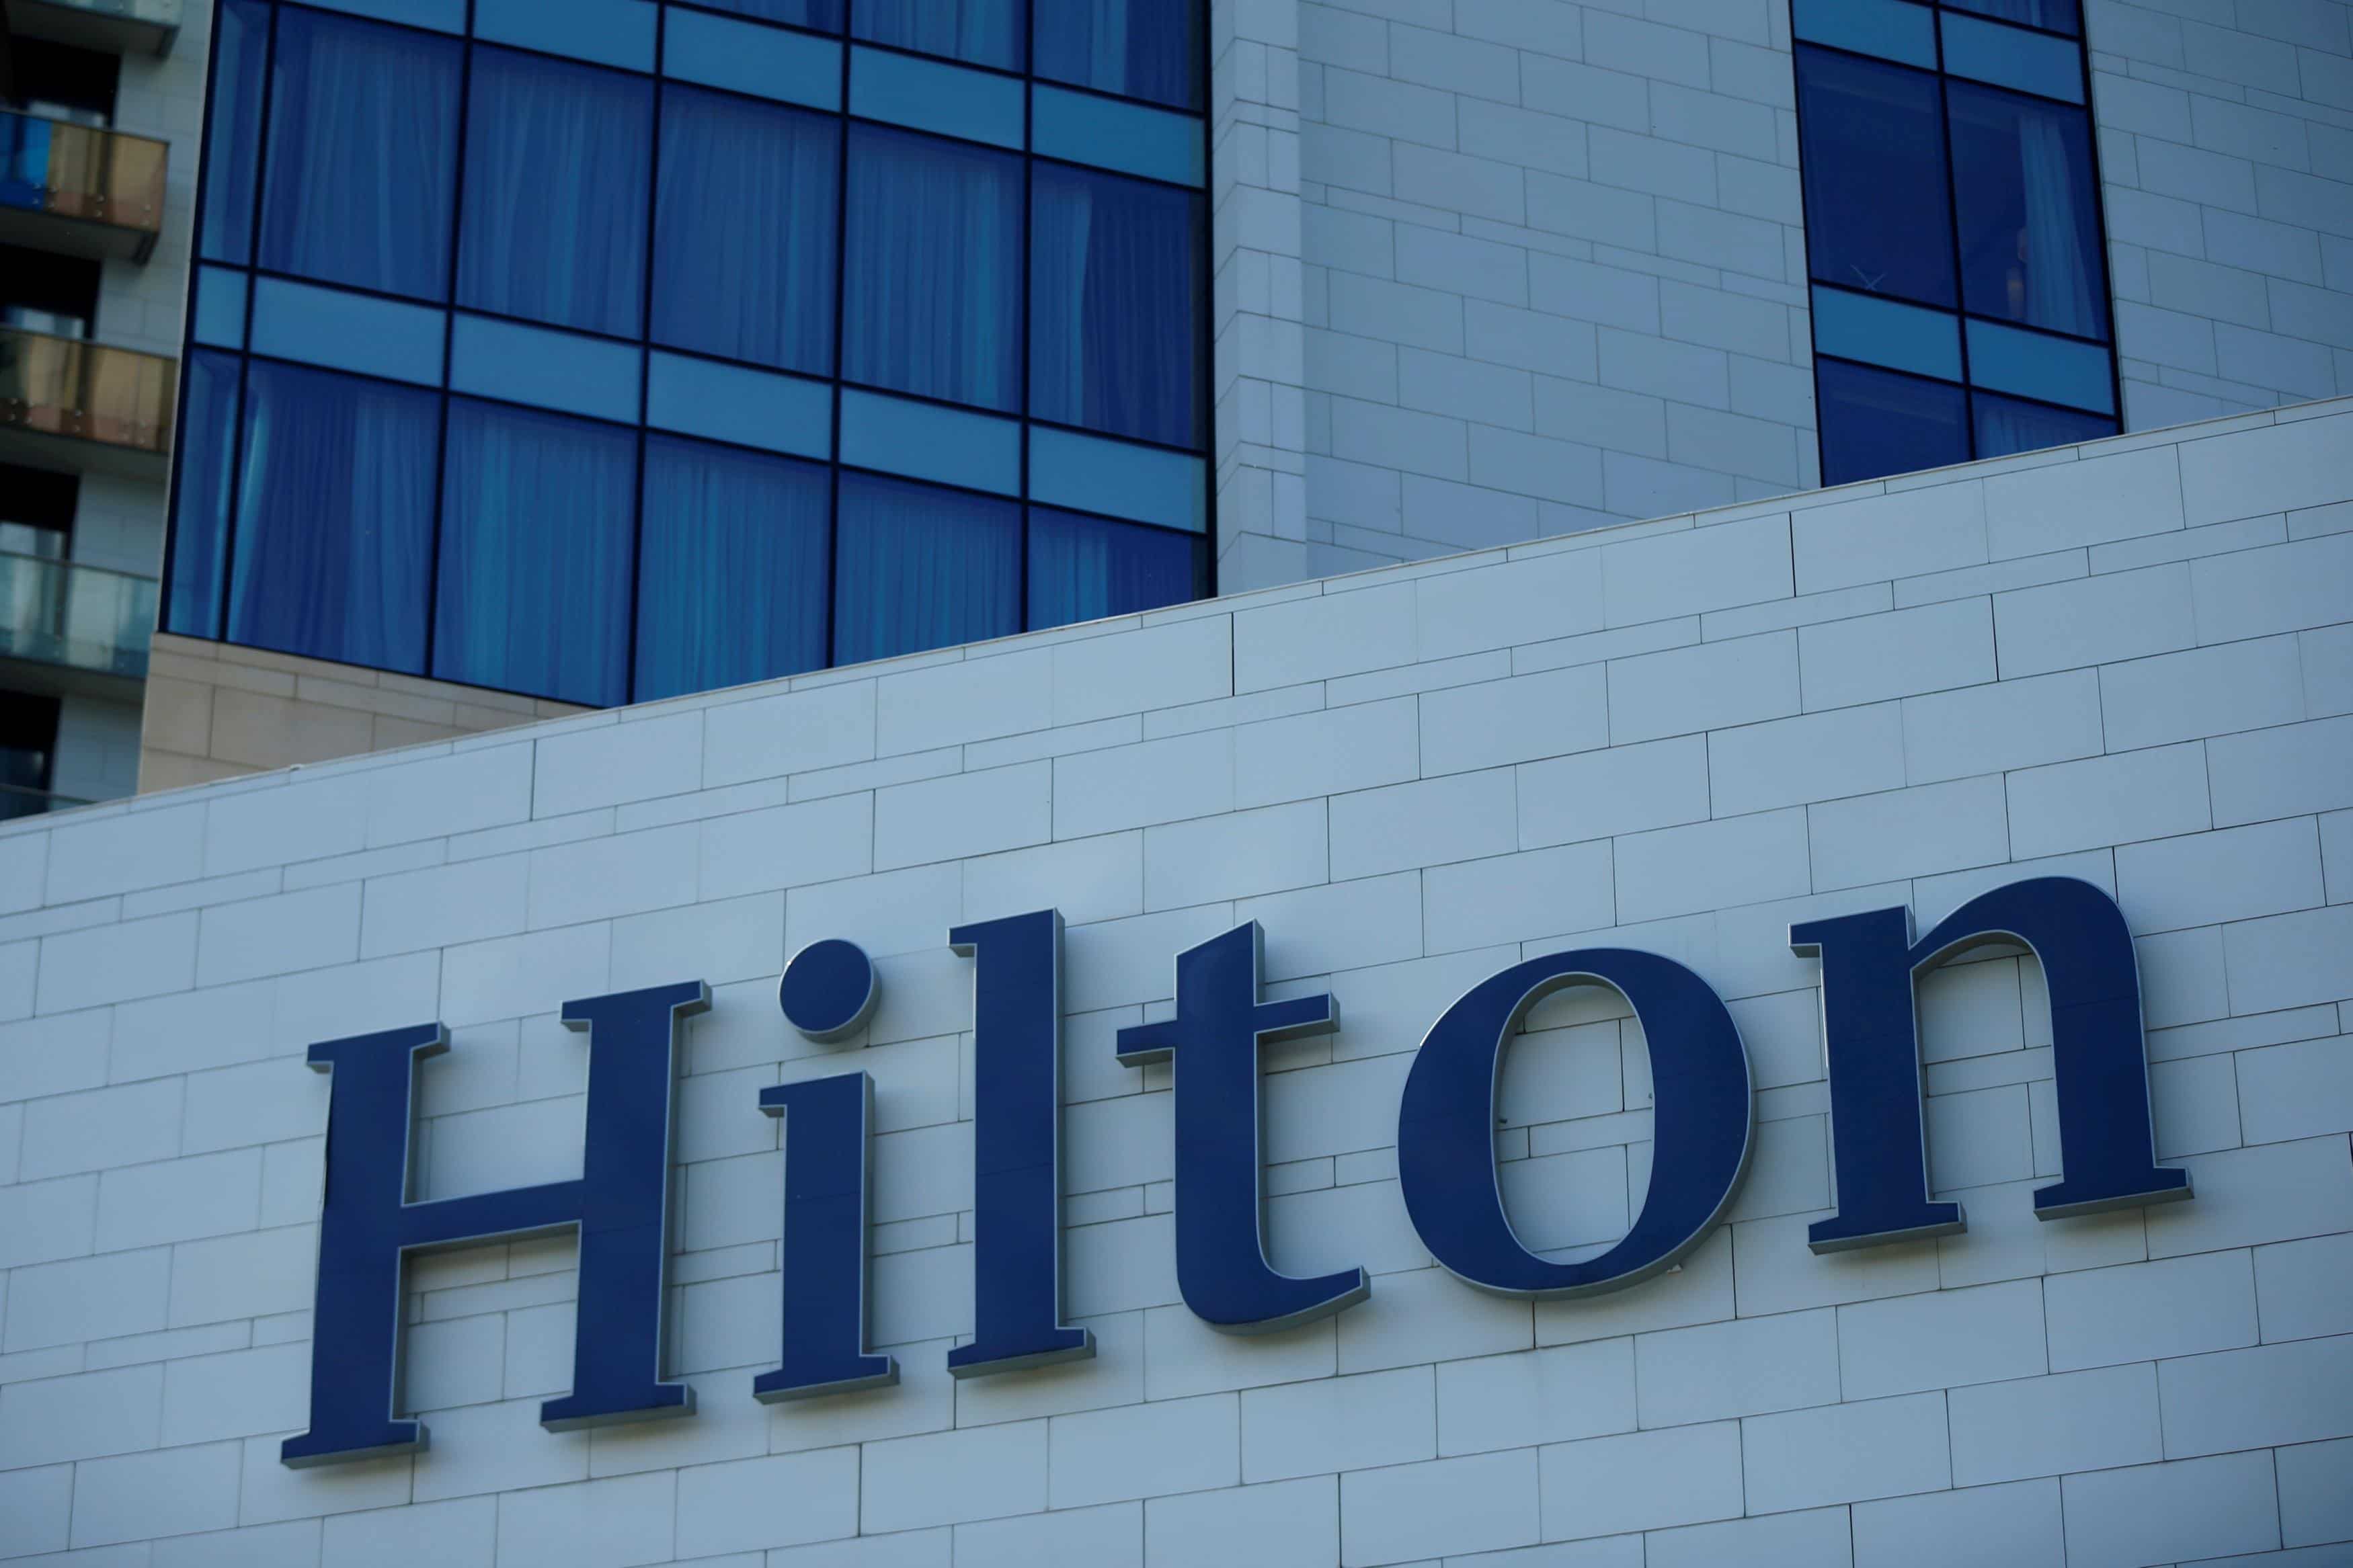 Coronavirus scare forces shutdown of global brands like Hilton in China | Zee Business4 日前